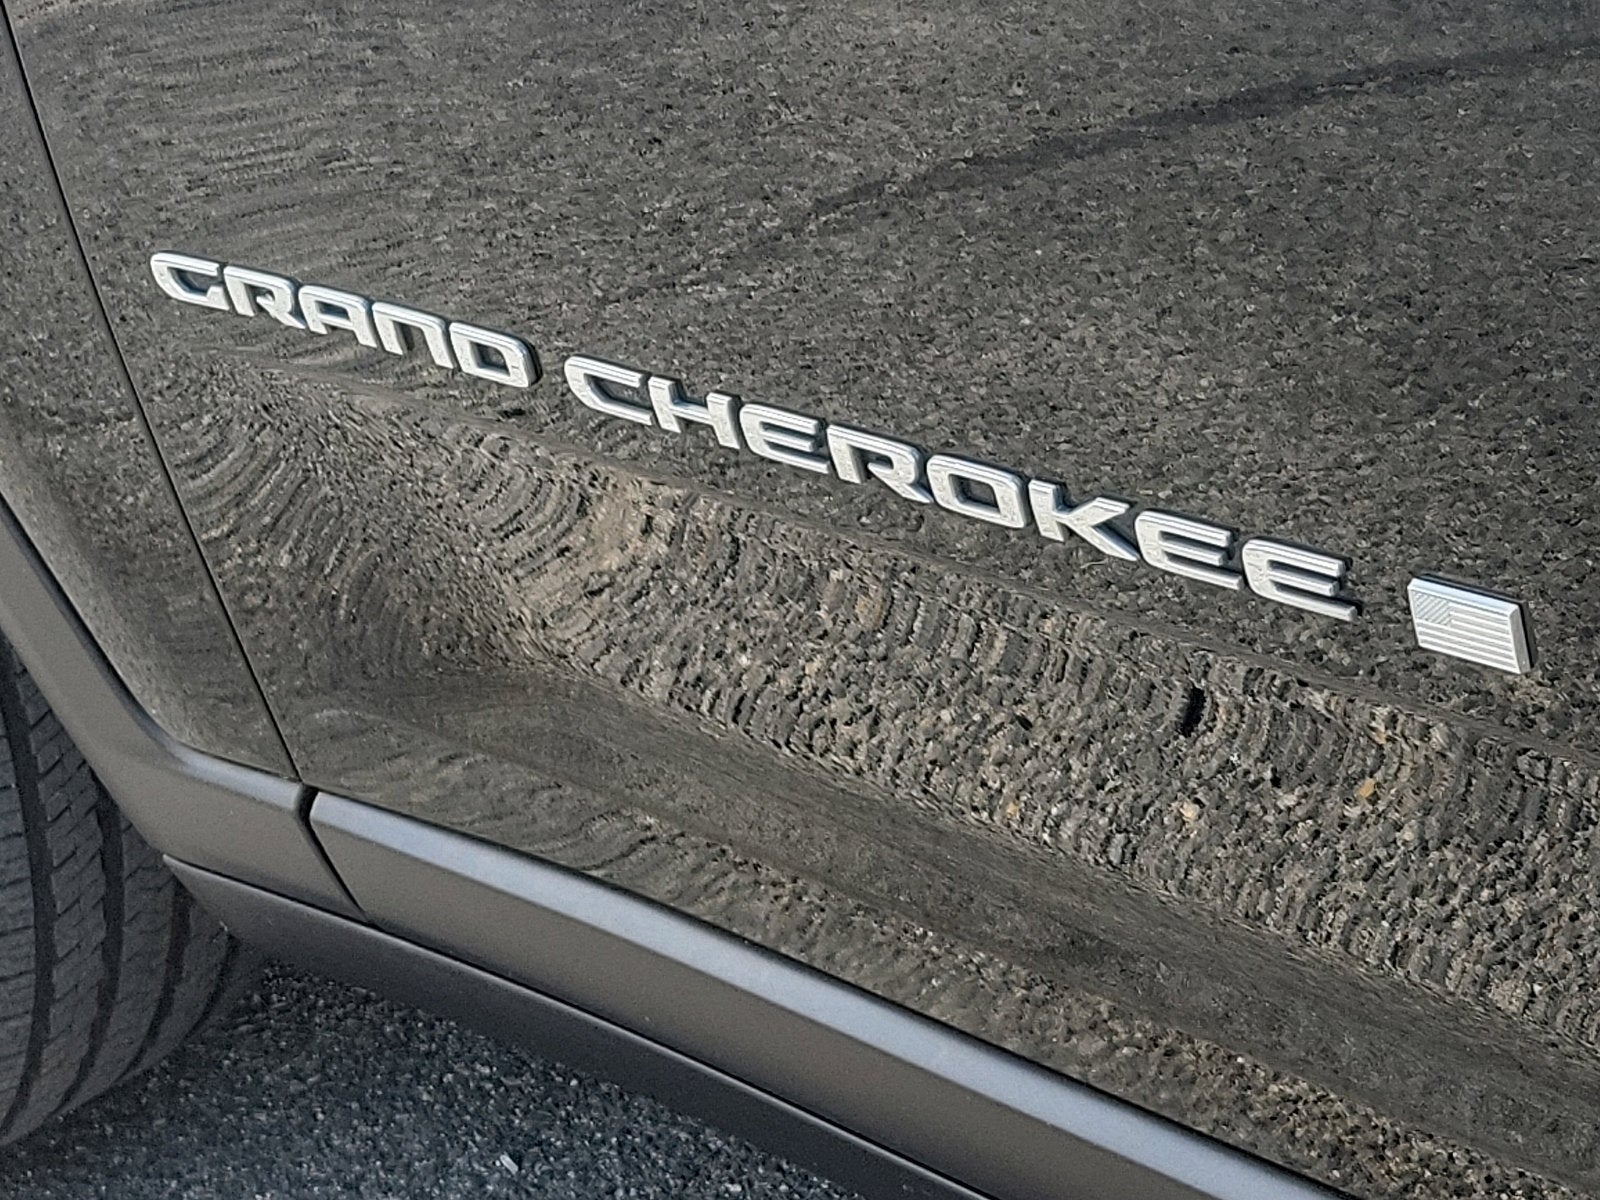 2021 Jeep G CHEROKEE LTD